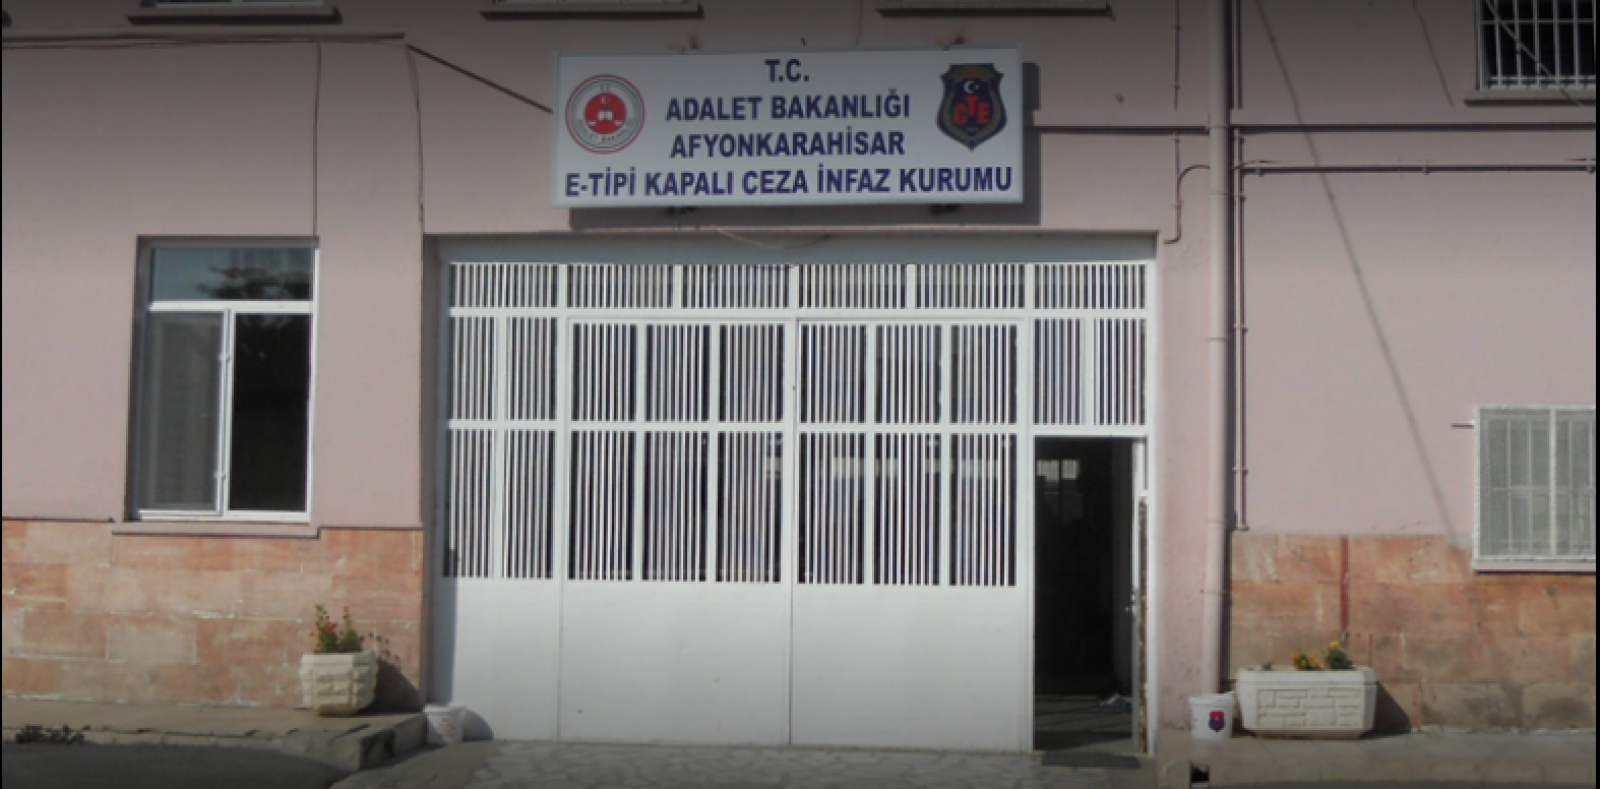 Afyonkarahisar Prison